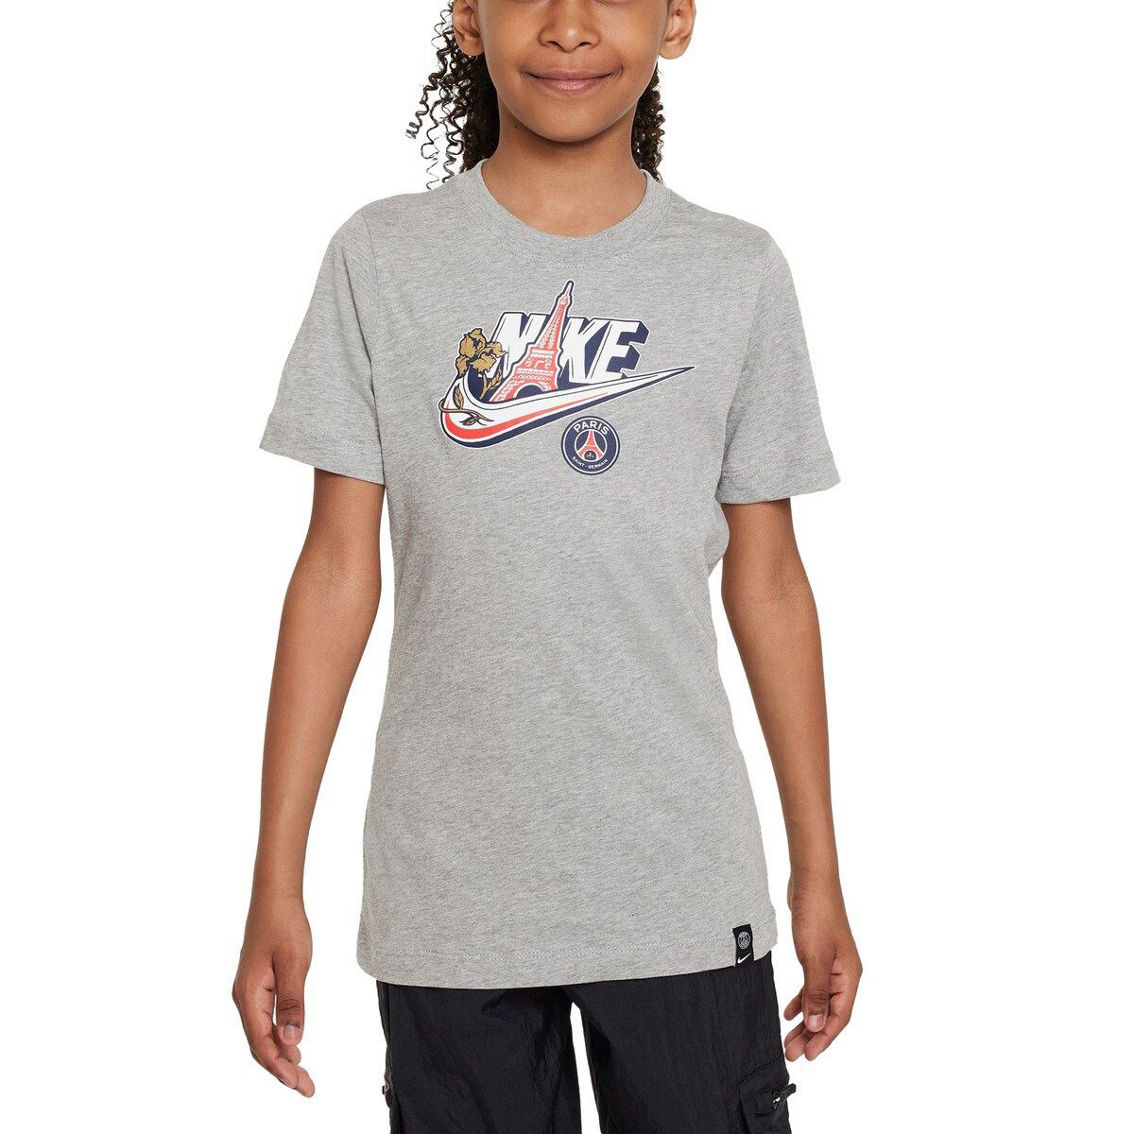 Nike Youth Heather Gray Paris Saint-Germain Futura T-Shirt